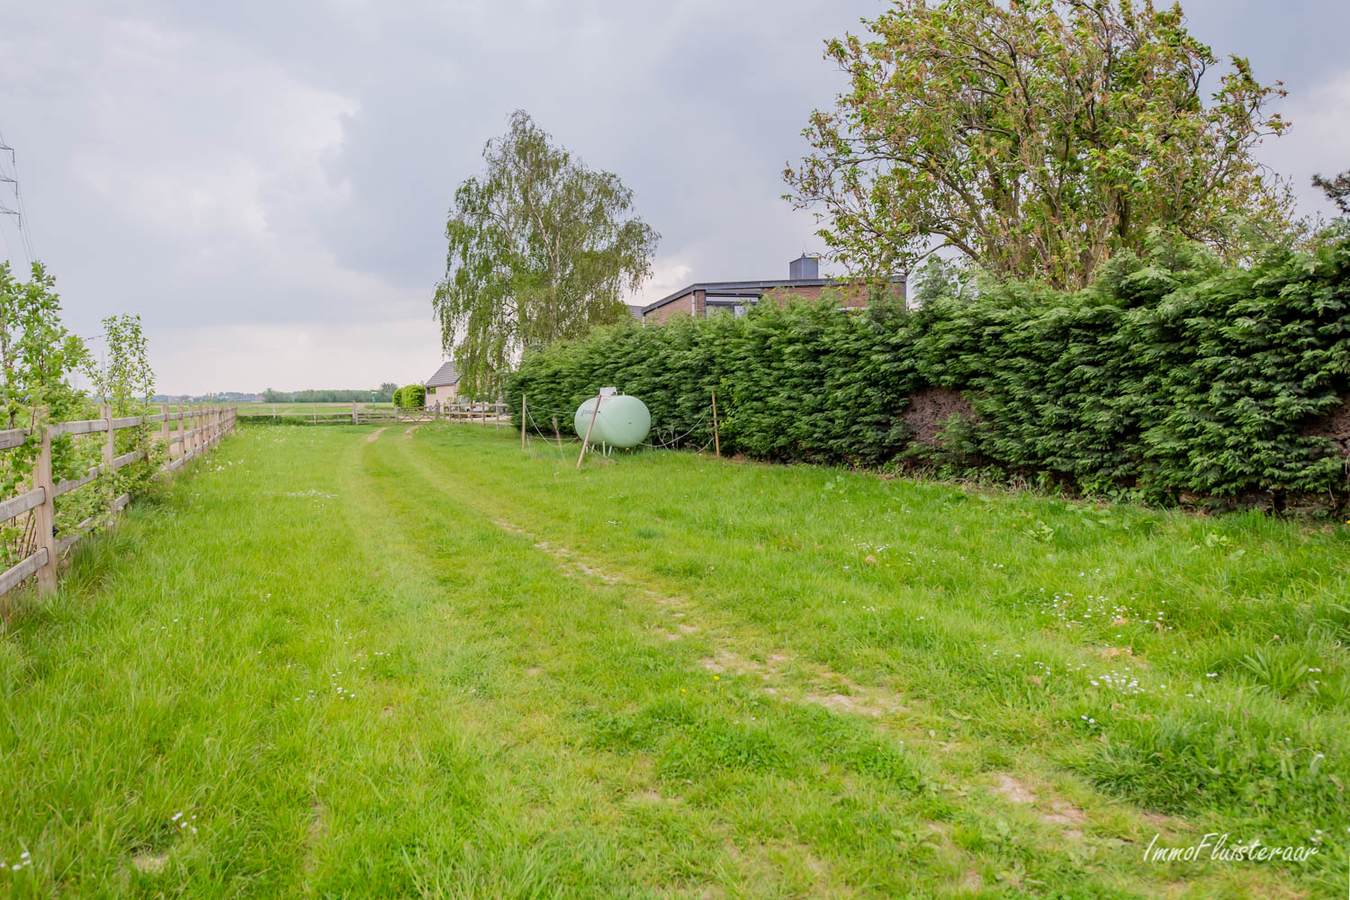 Property sold in Kampenhout